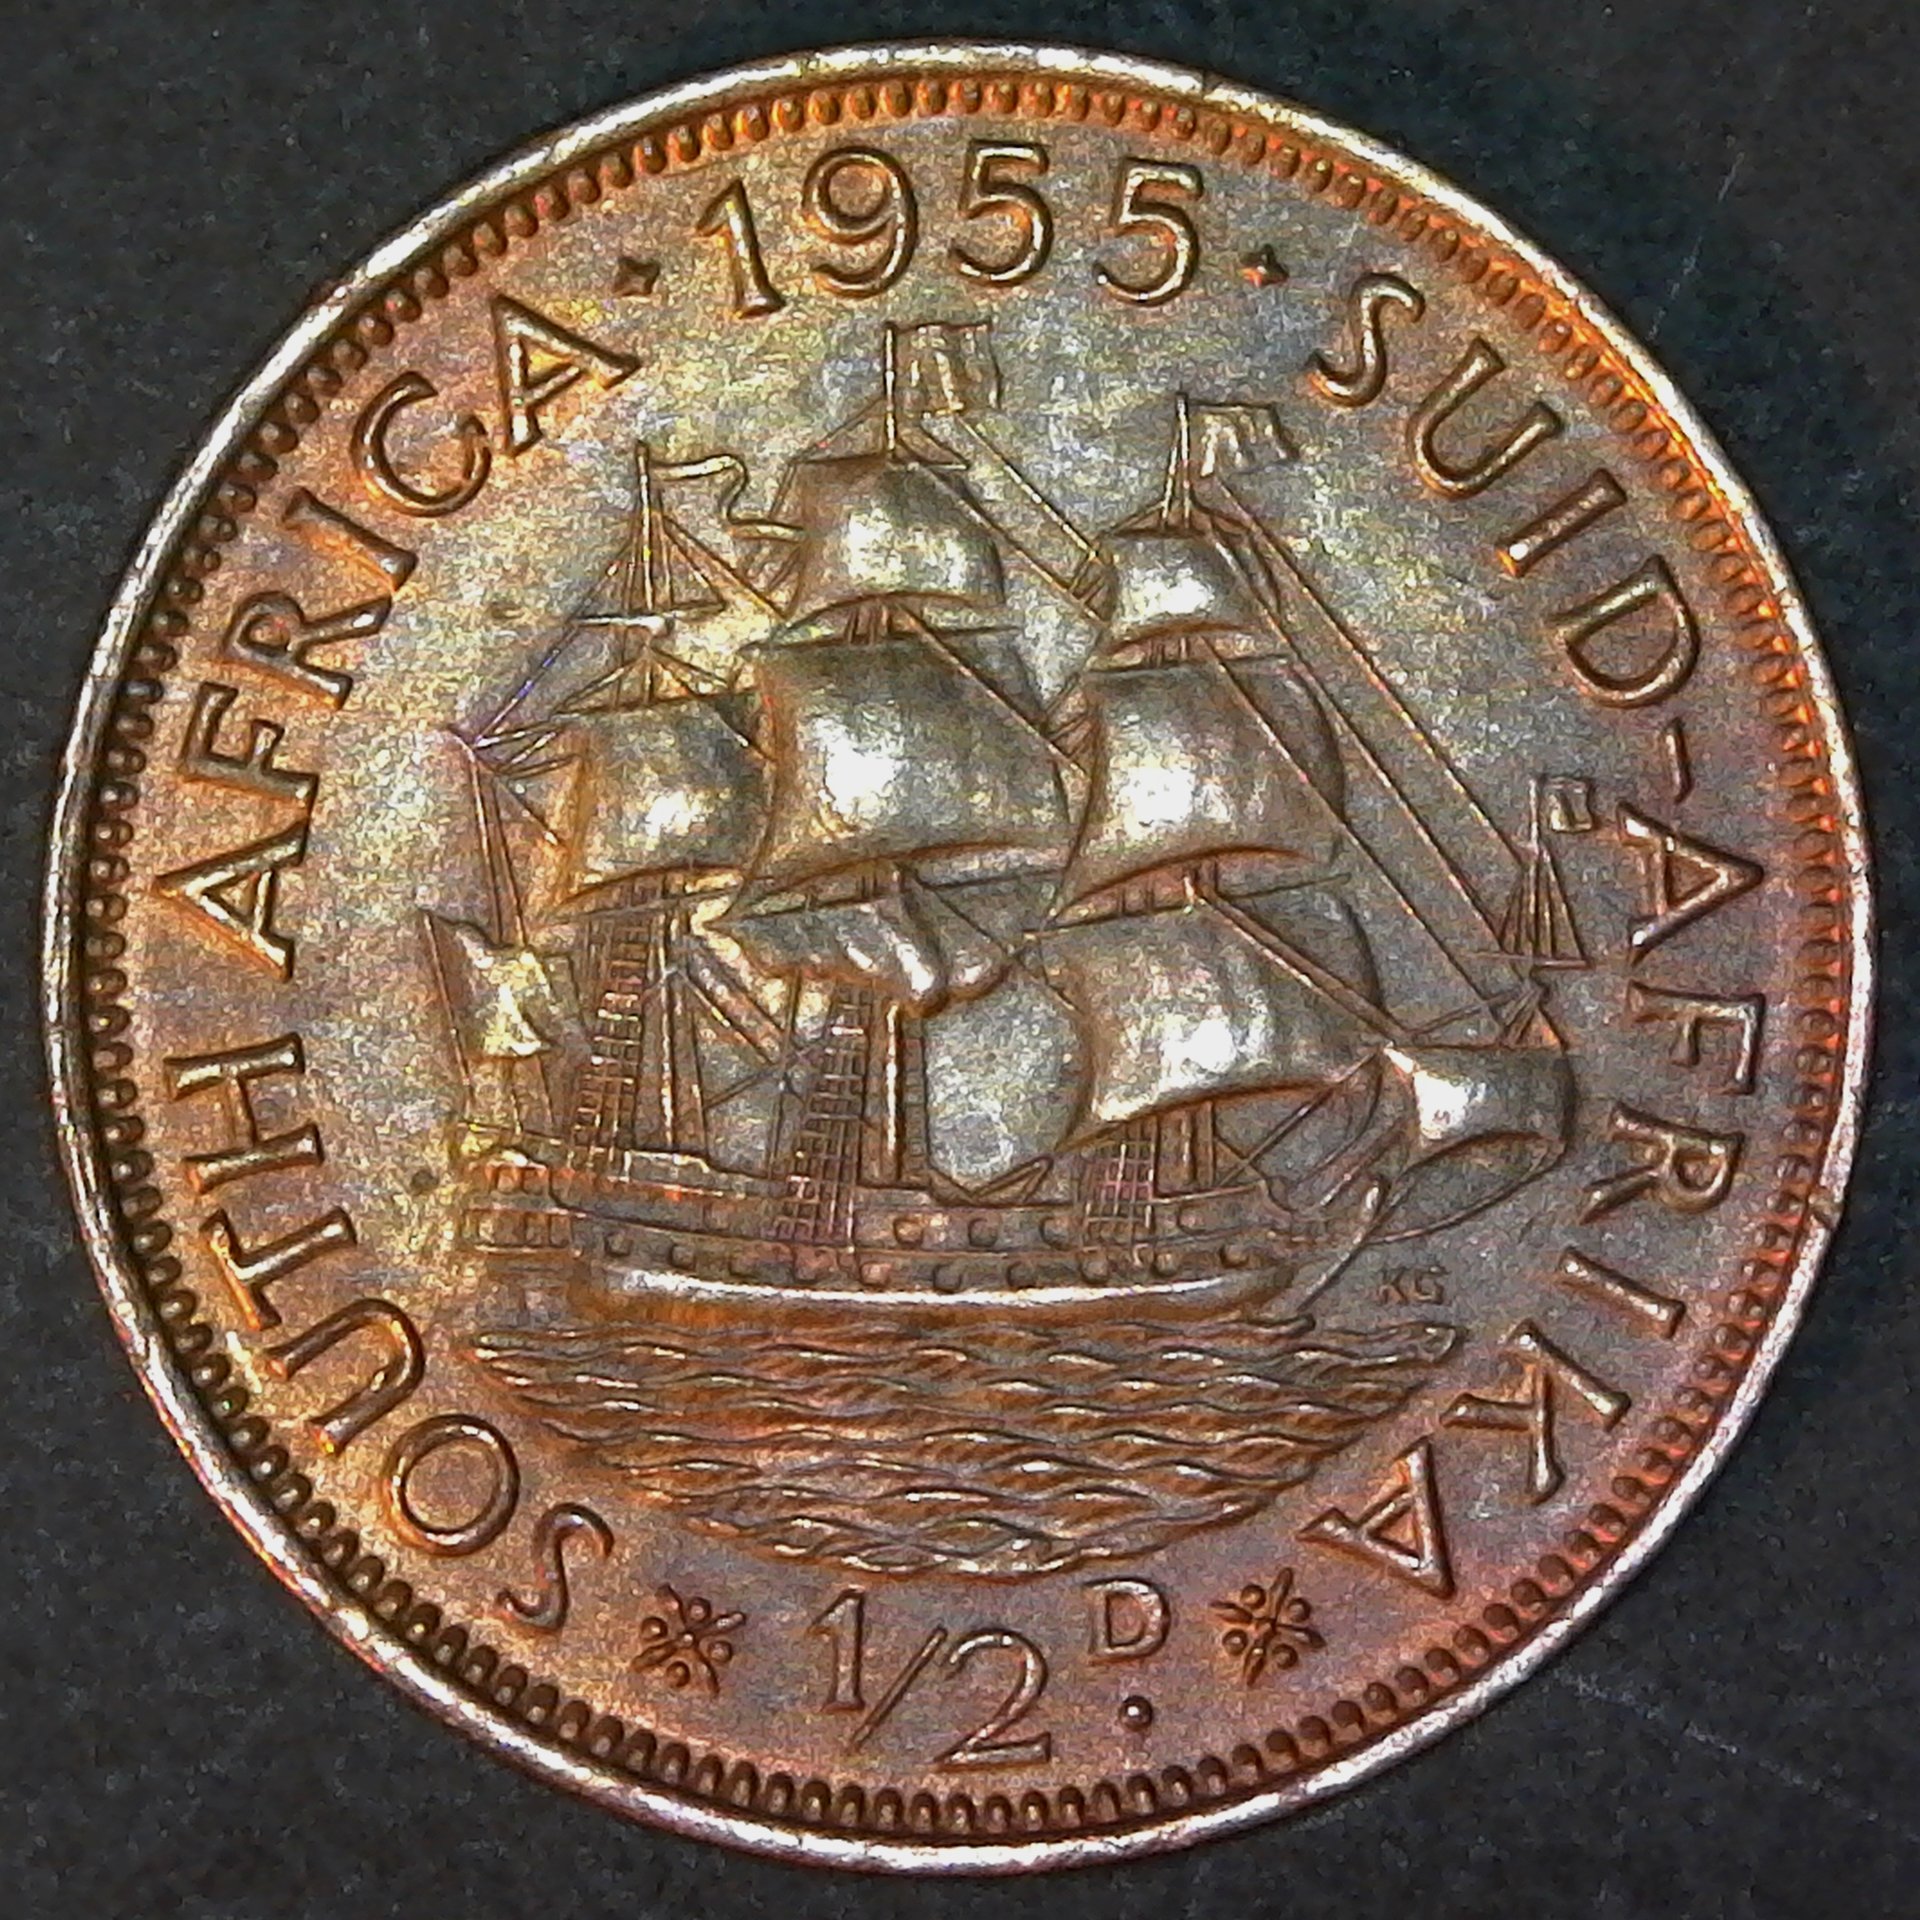 South Africa Half Penny 1955 obverse.jpg